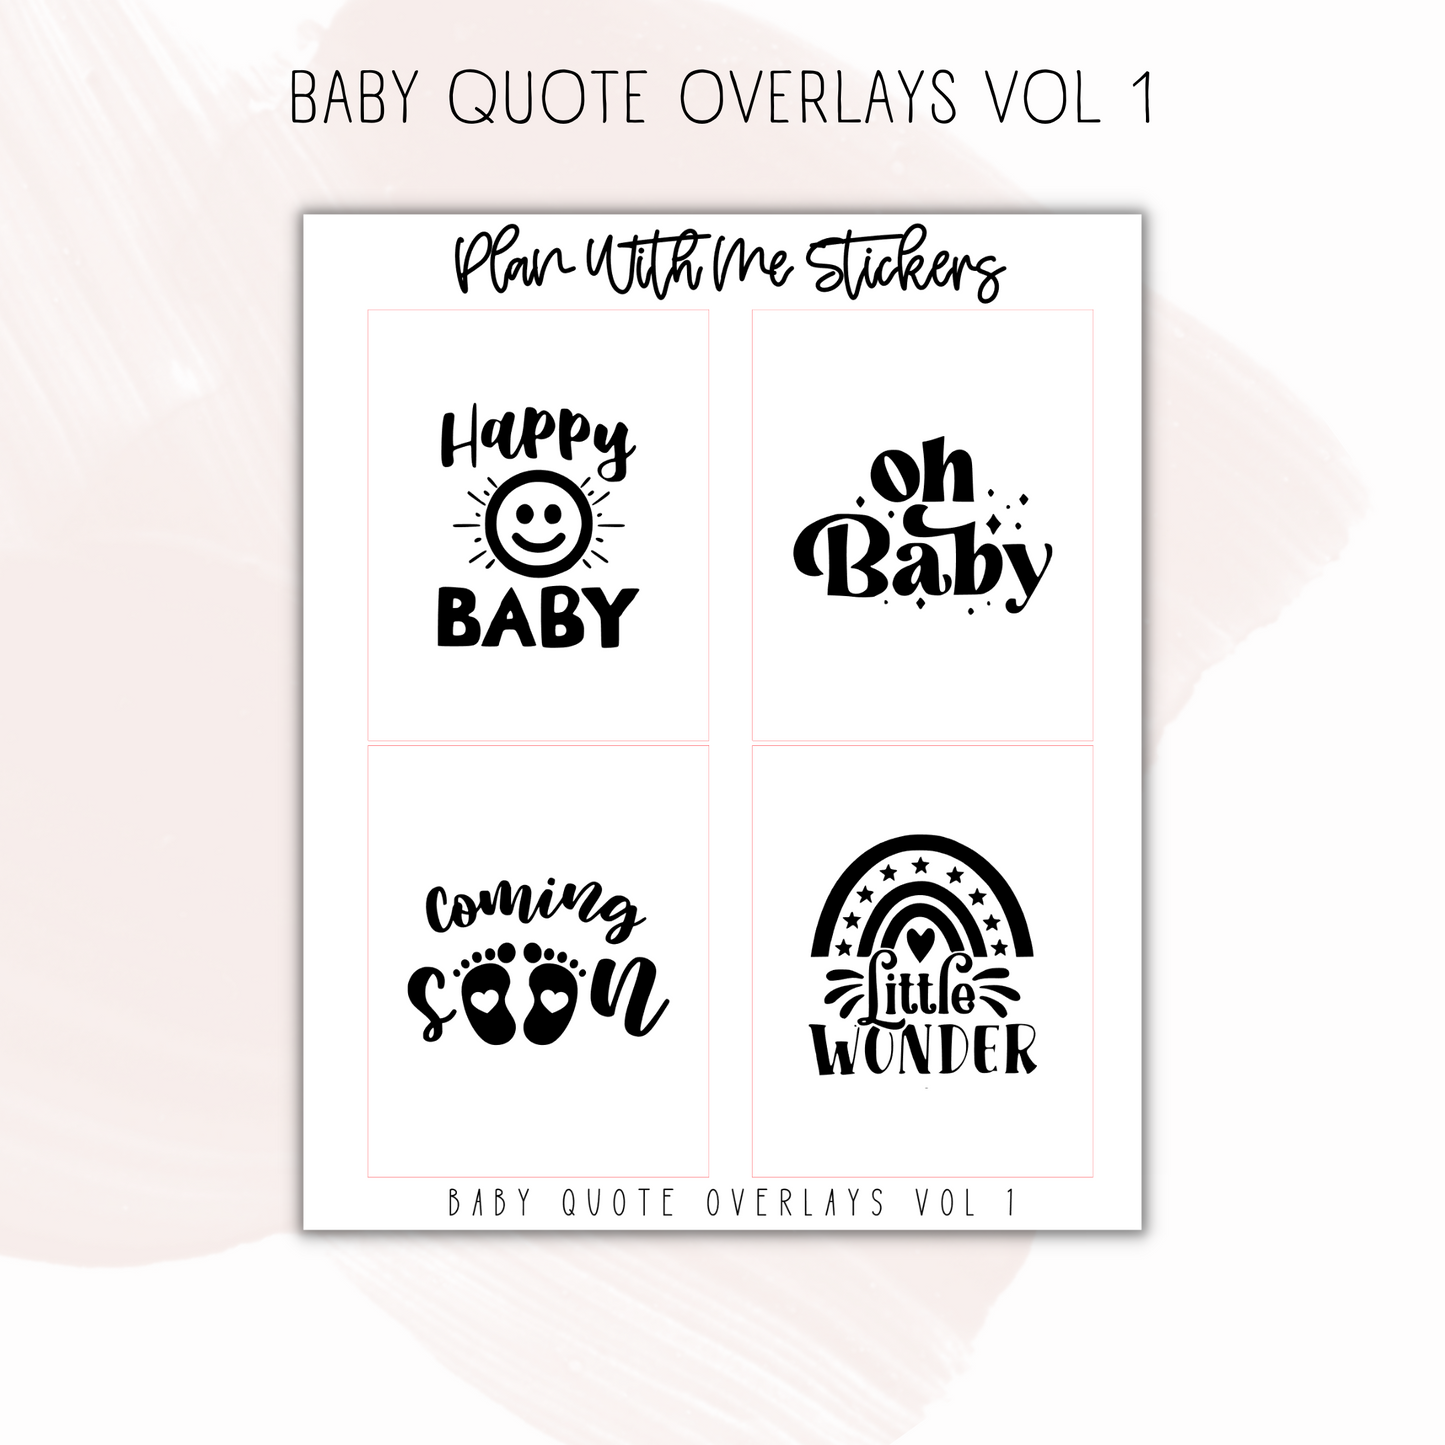 Baby Quote Overlays Vol 1